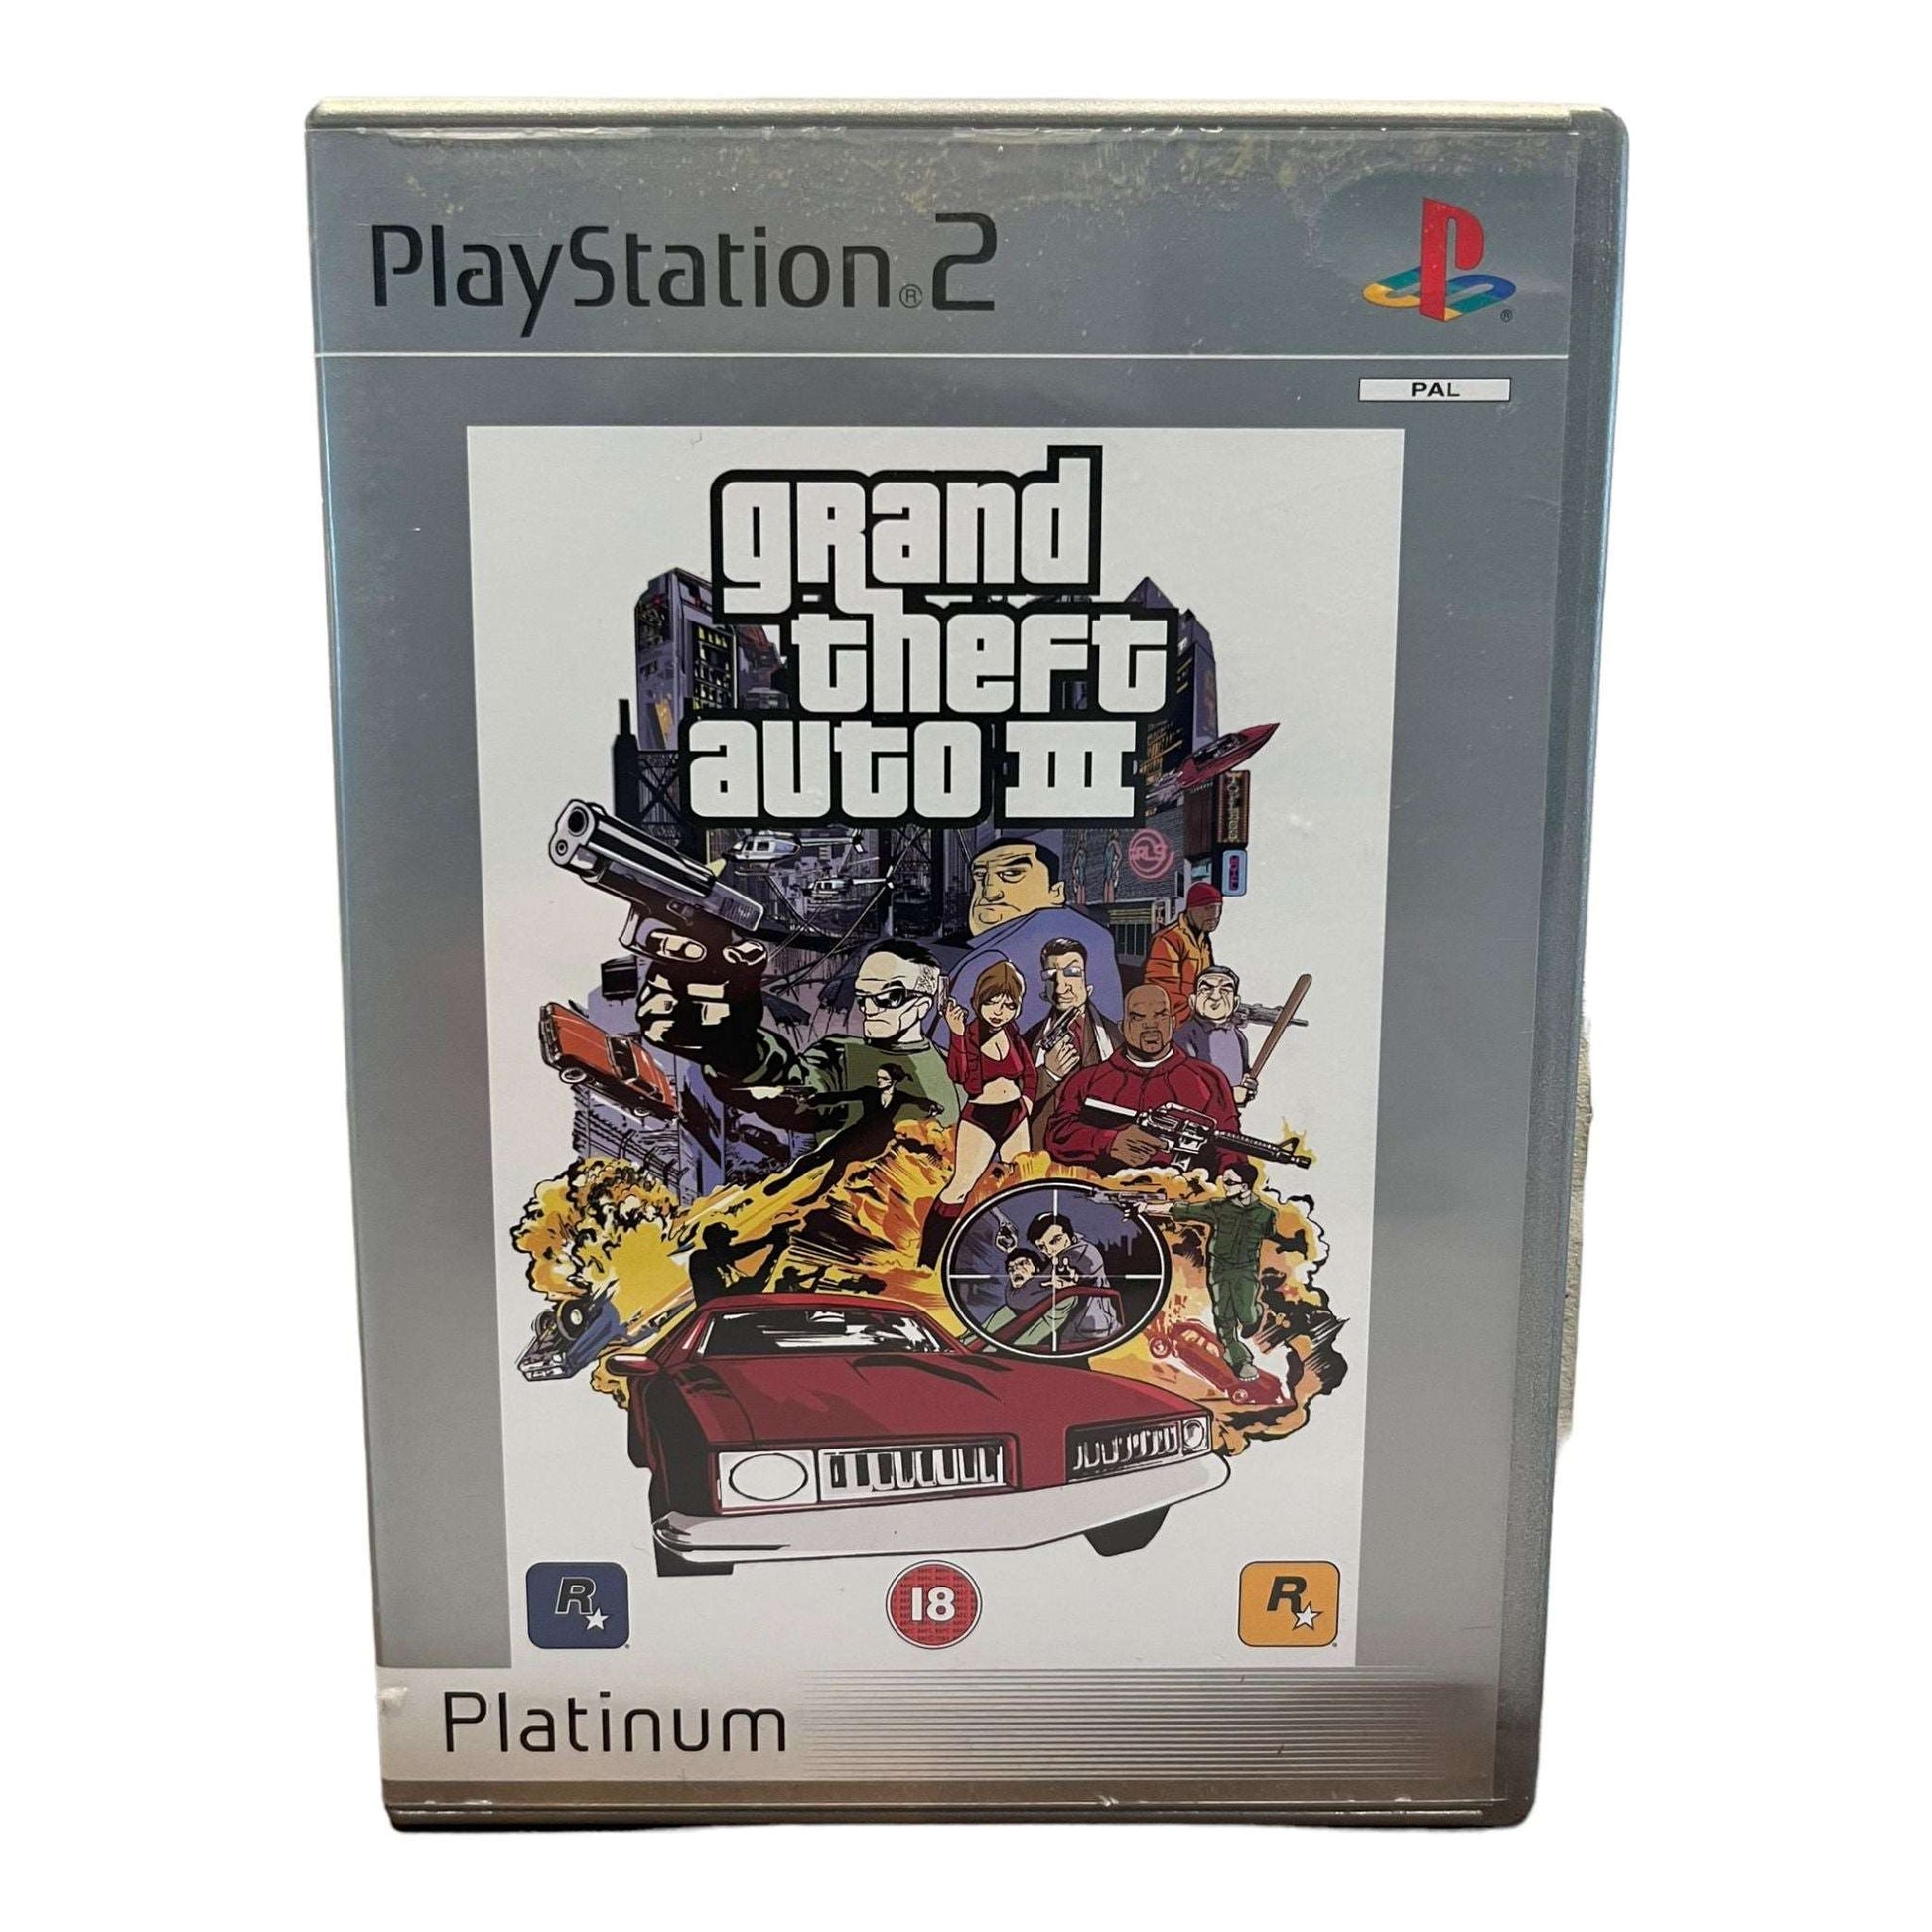 Grand Theft Auto III GTA 3 - PS2 - Platinum